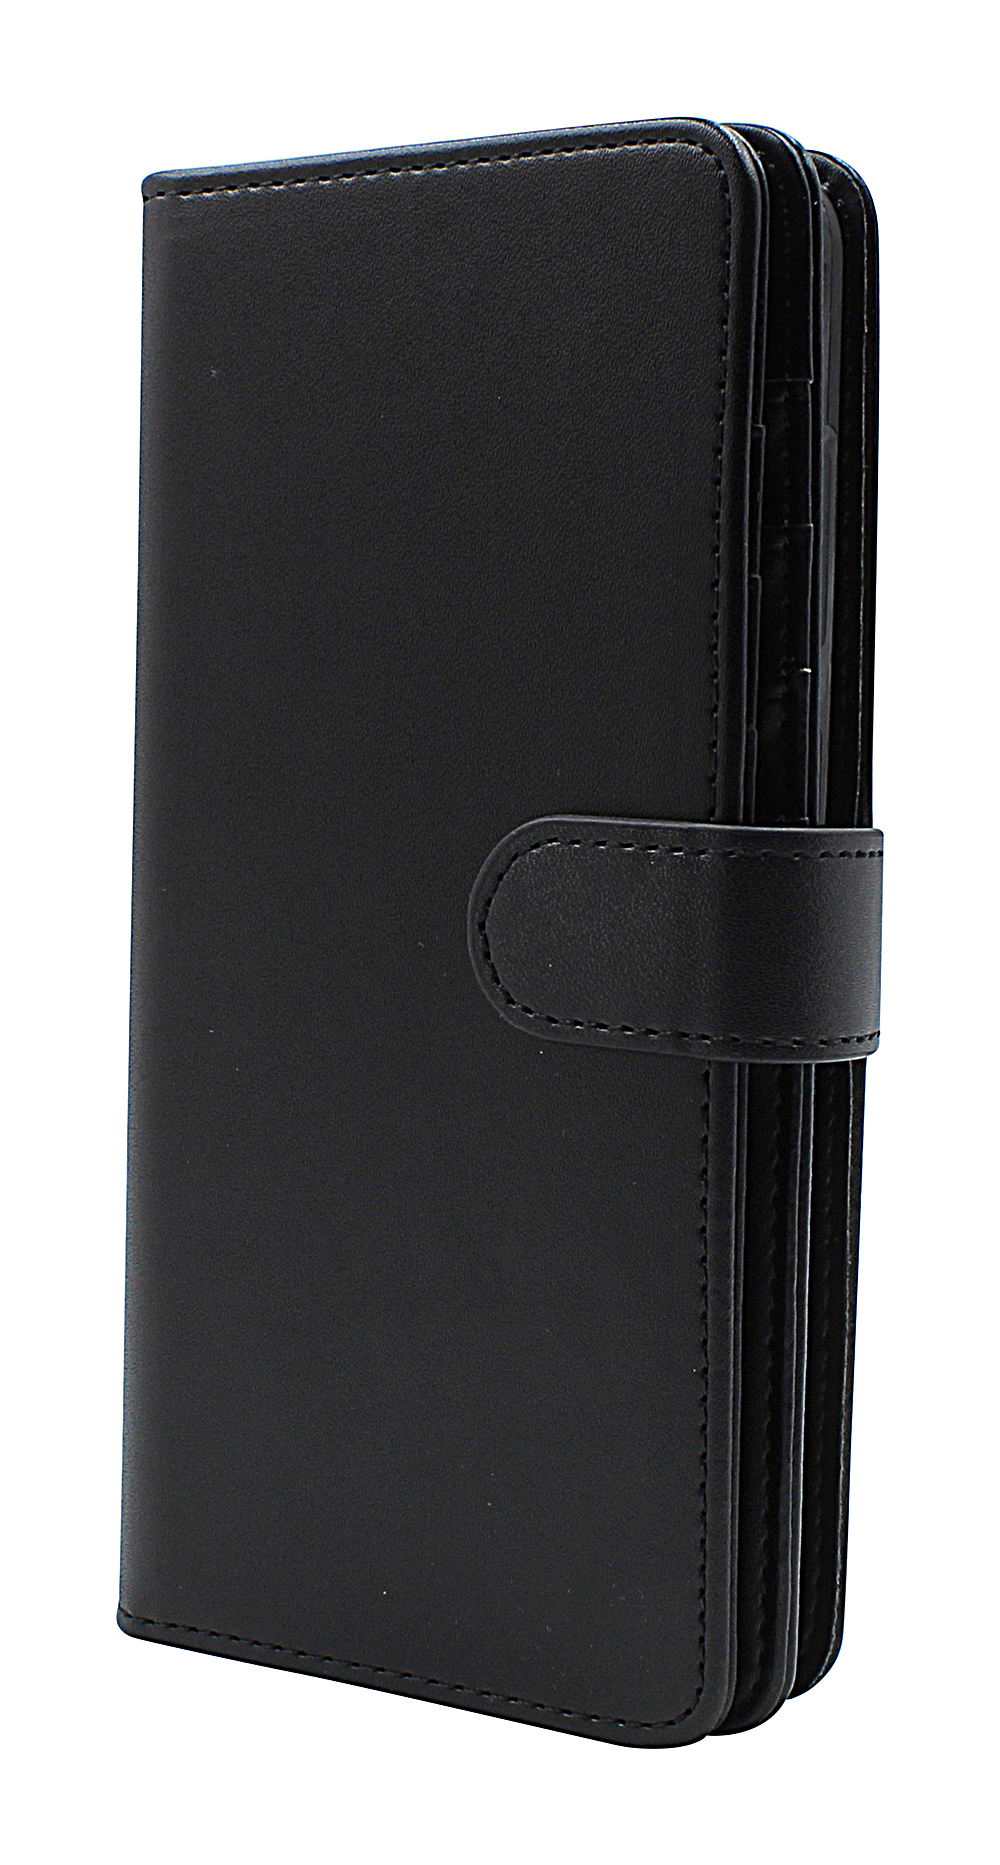 Skimblocker XL Magnet Wallet Samsung Galaxy S20 Plus (G986B)